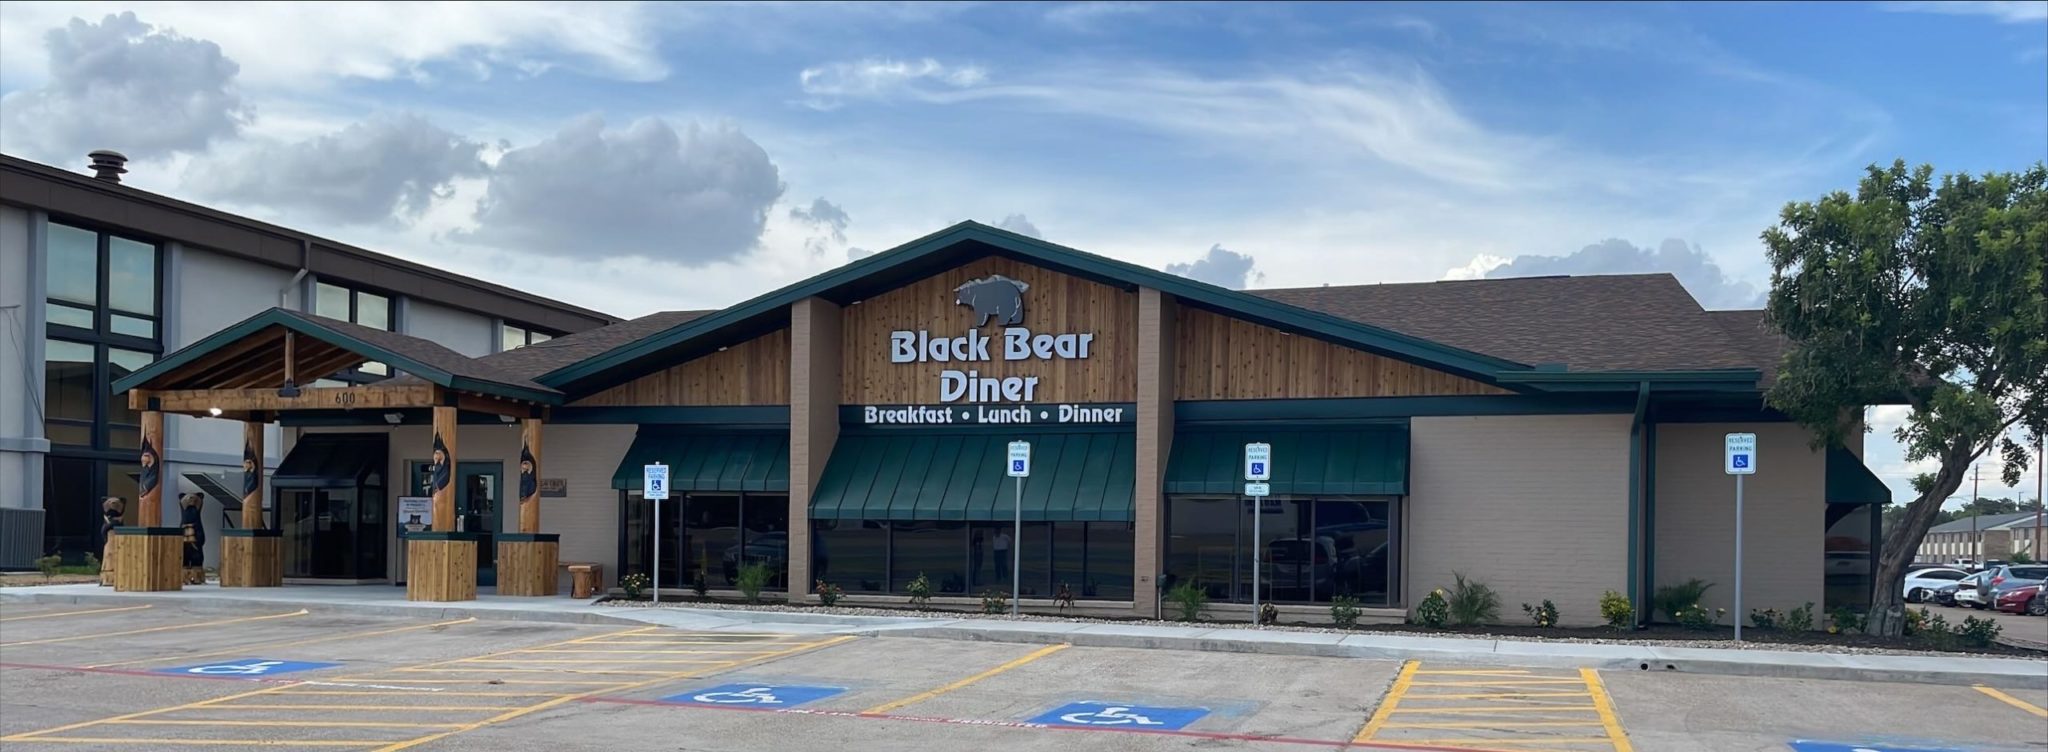 black bear diner new location league city